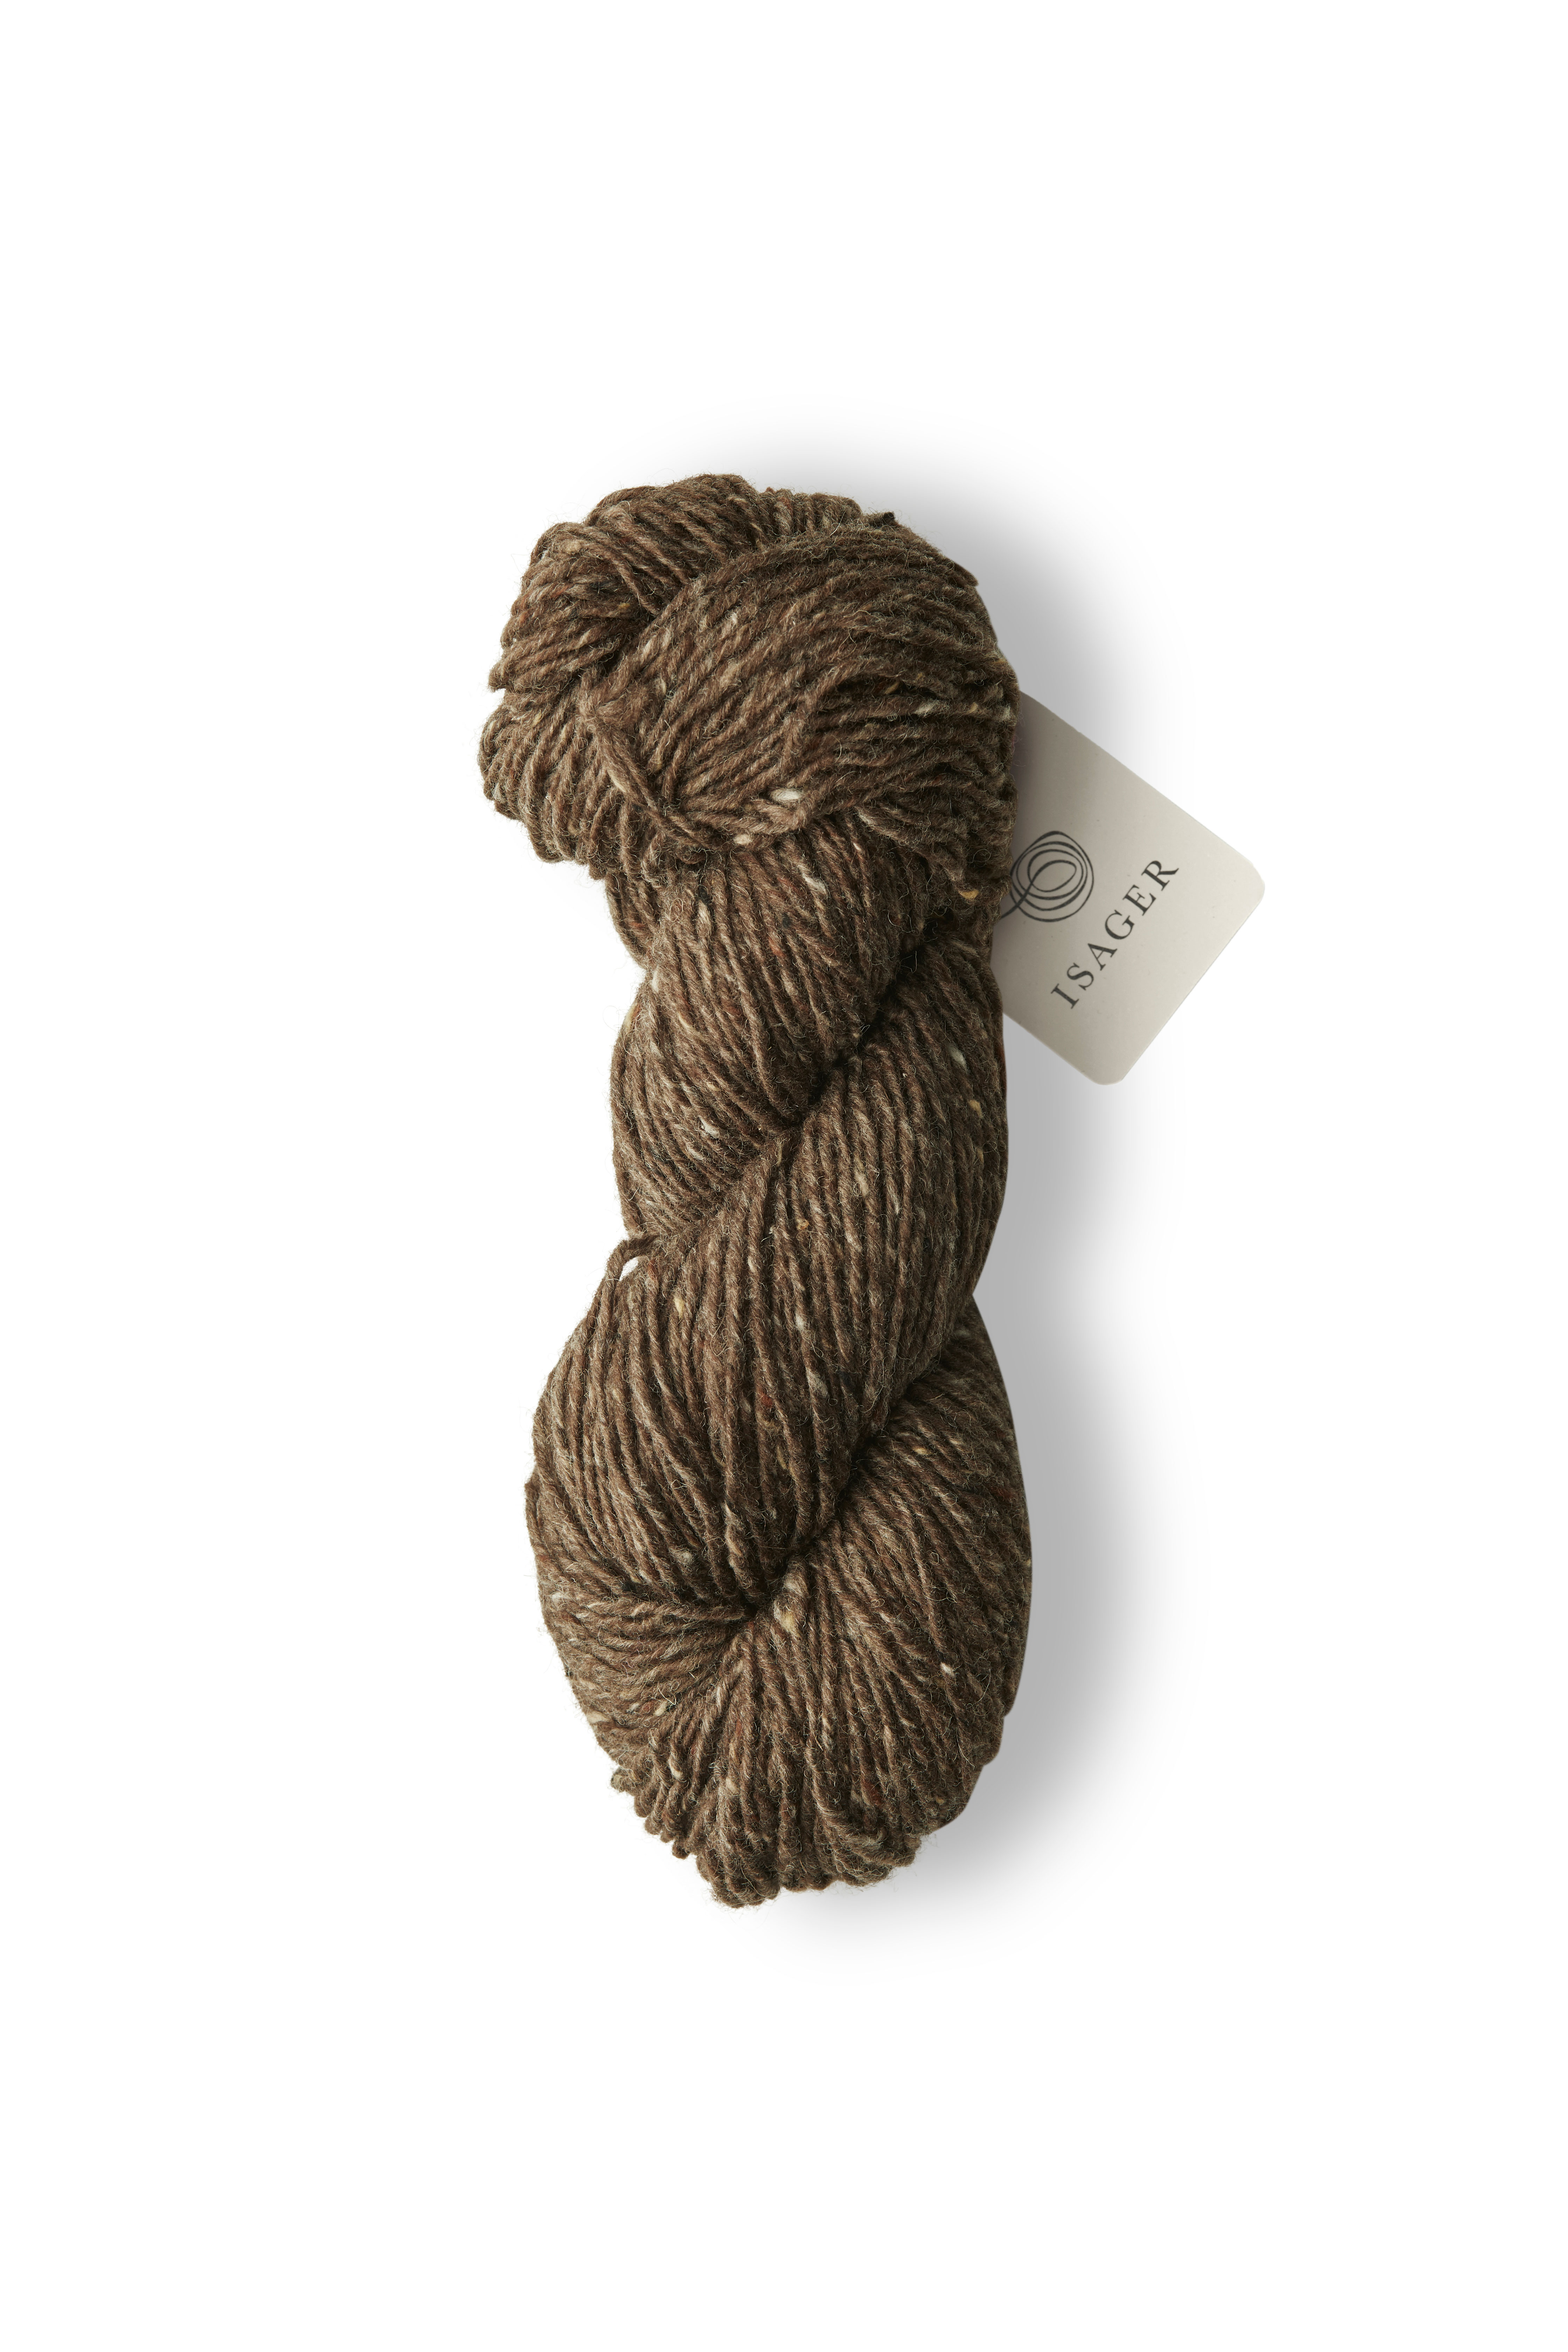 Aran Tweed - braun / Brown